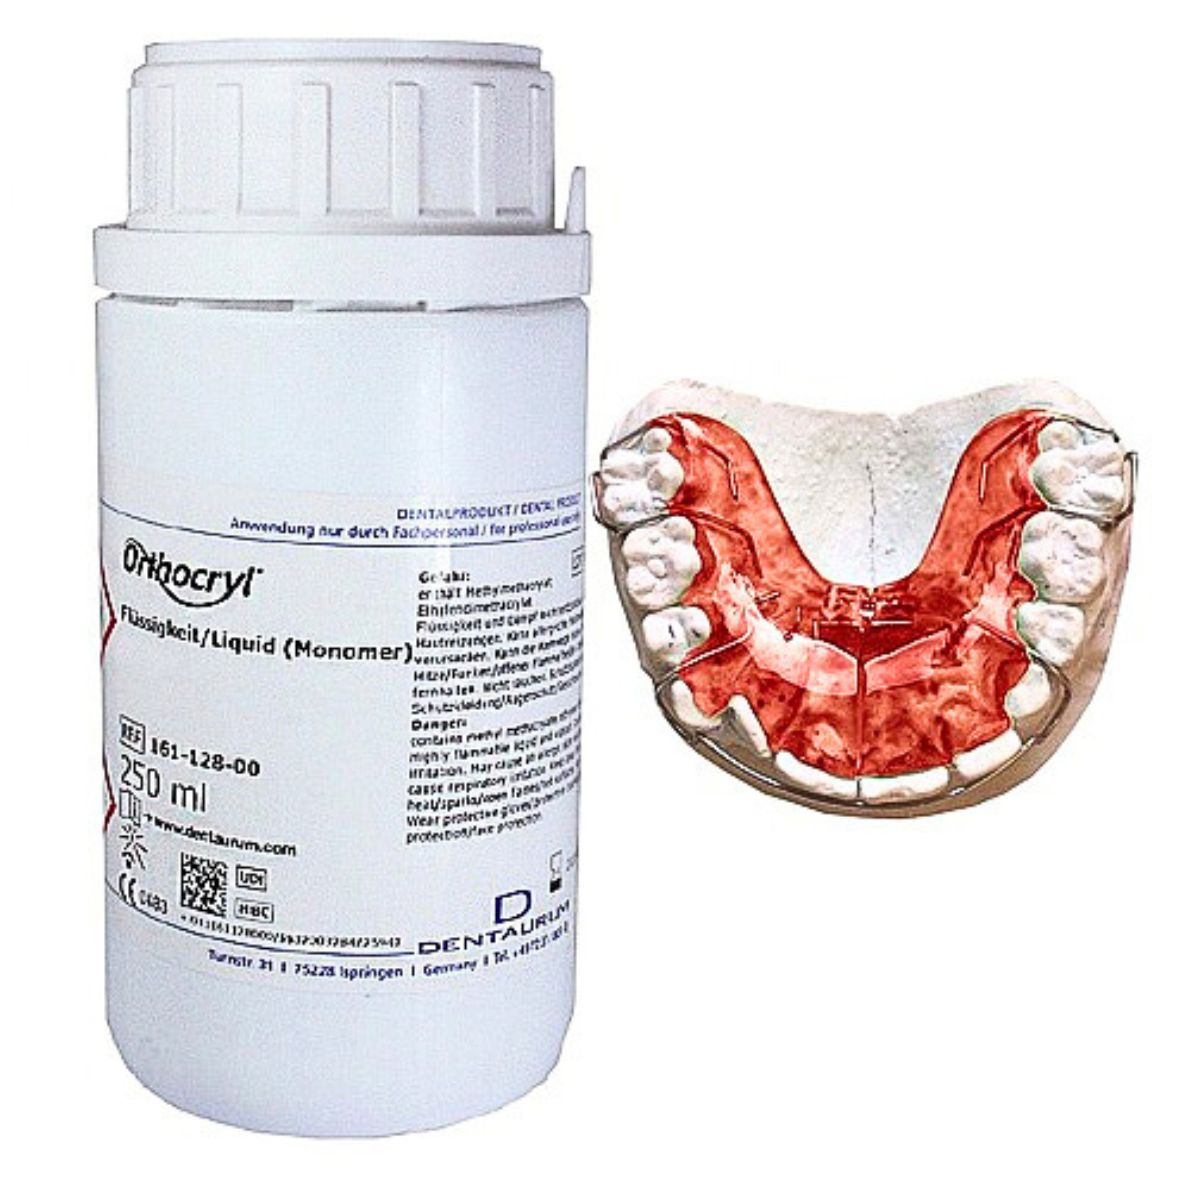 Dentaurum Orthocryl Red Acrylic Liquid 250ml